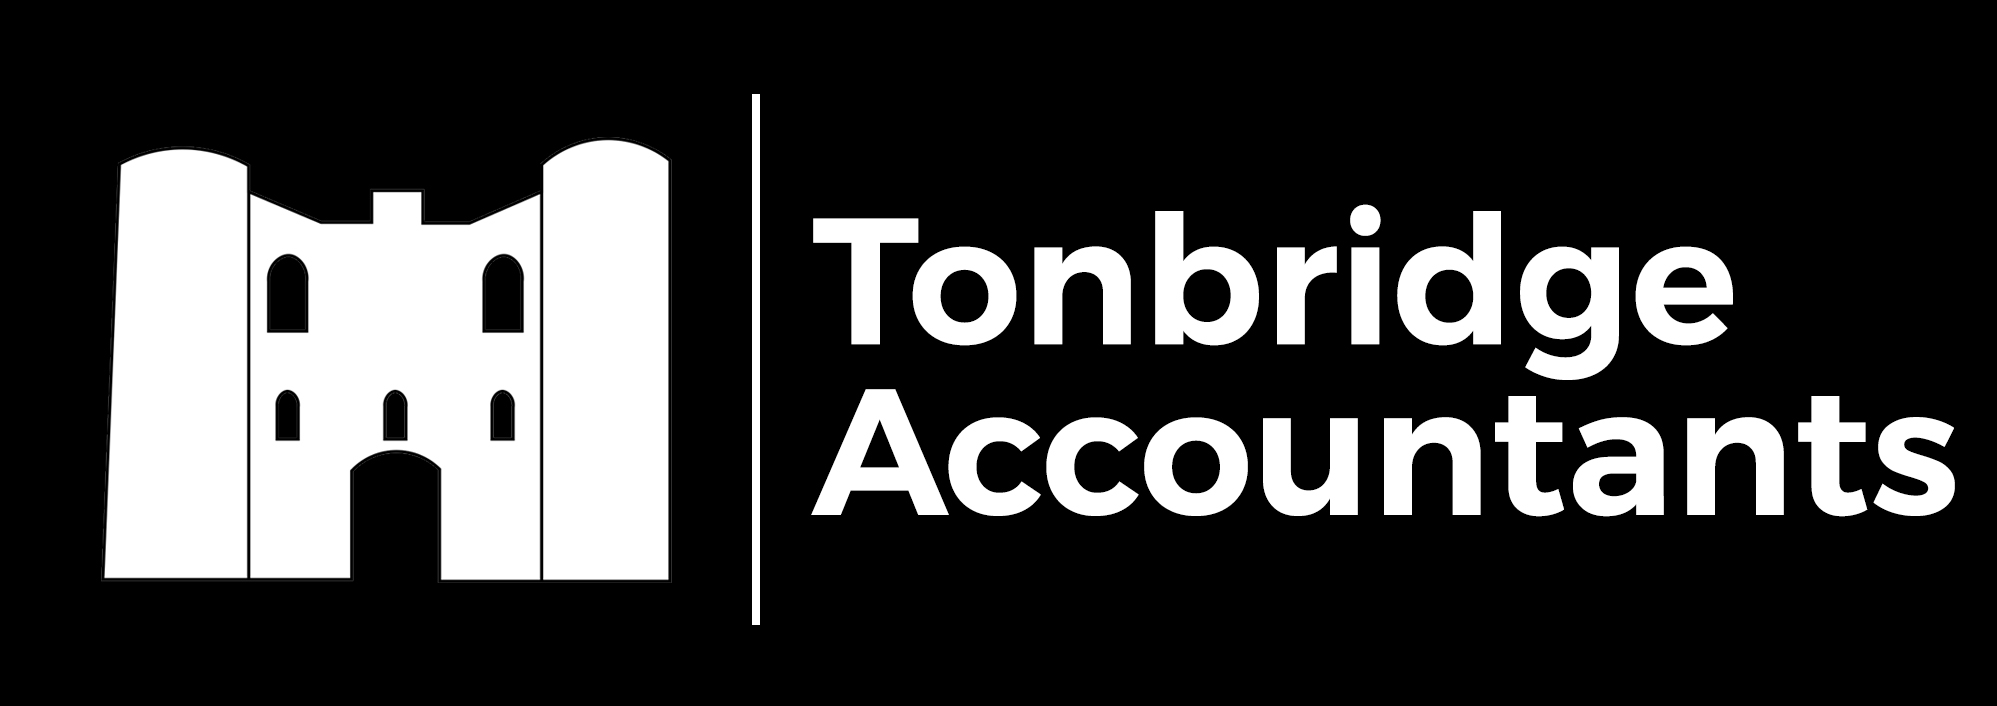 TONBRIDGE ACCOUNTANTS logo